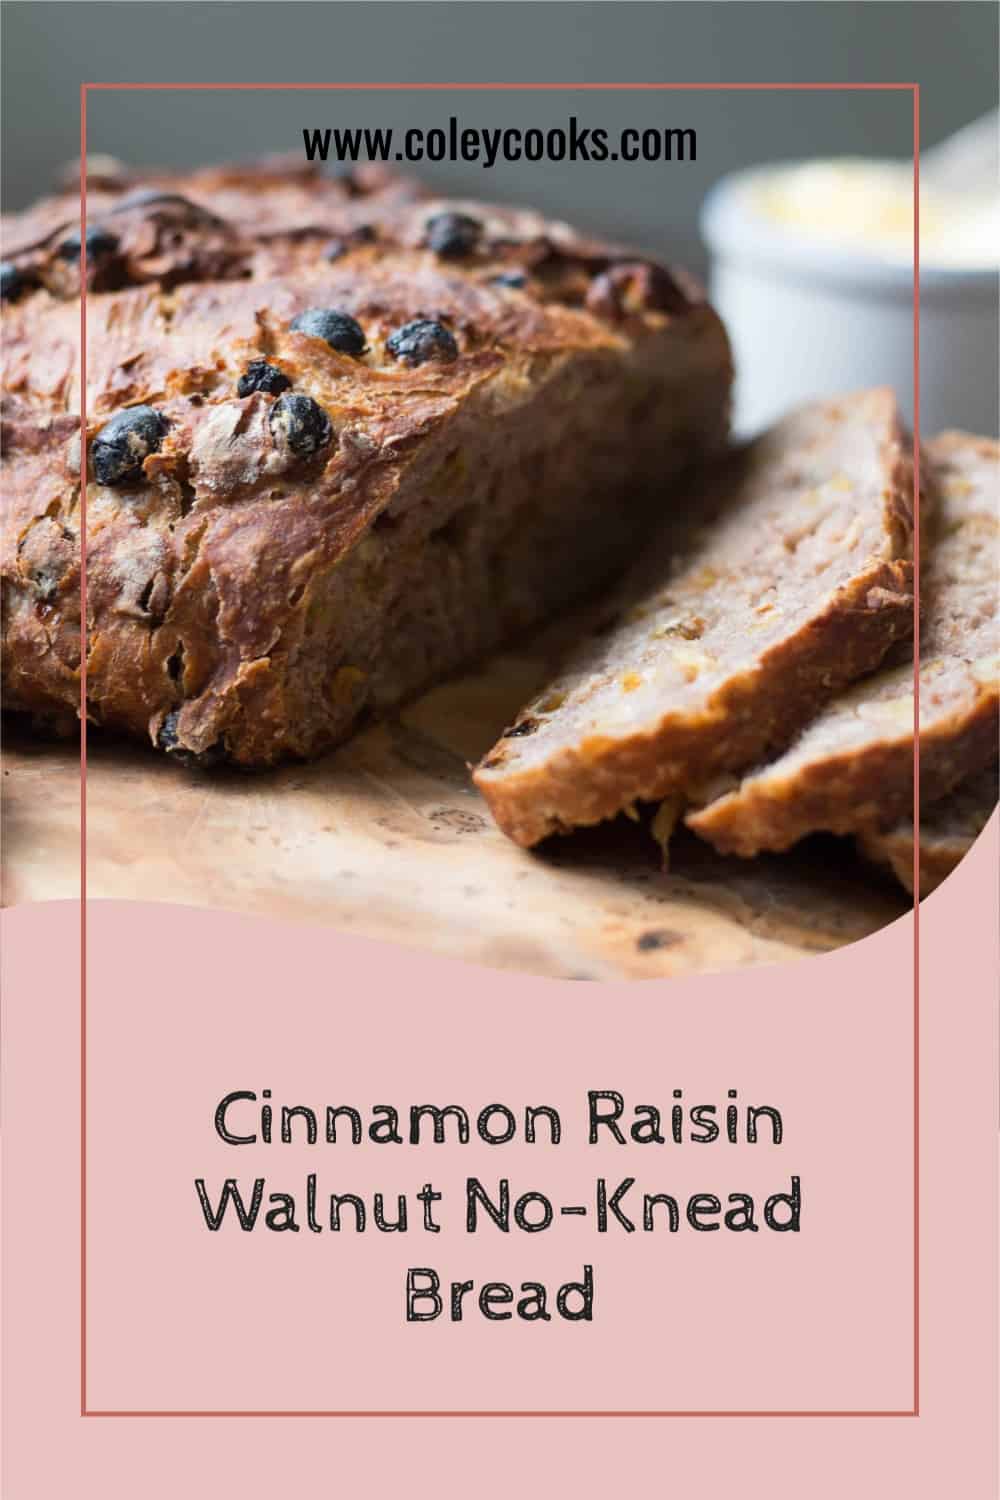 Cinnamon Raisin Walnut No-Knead Bread